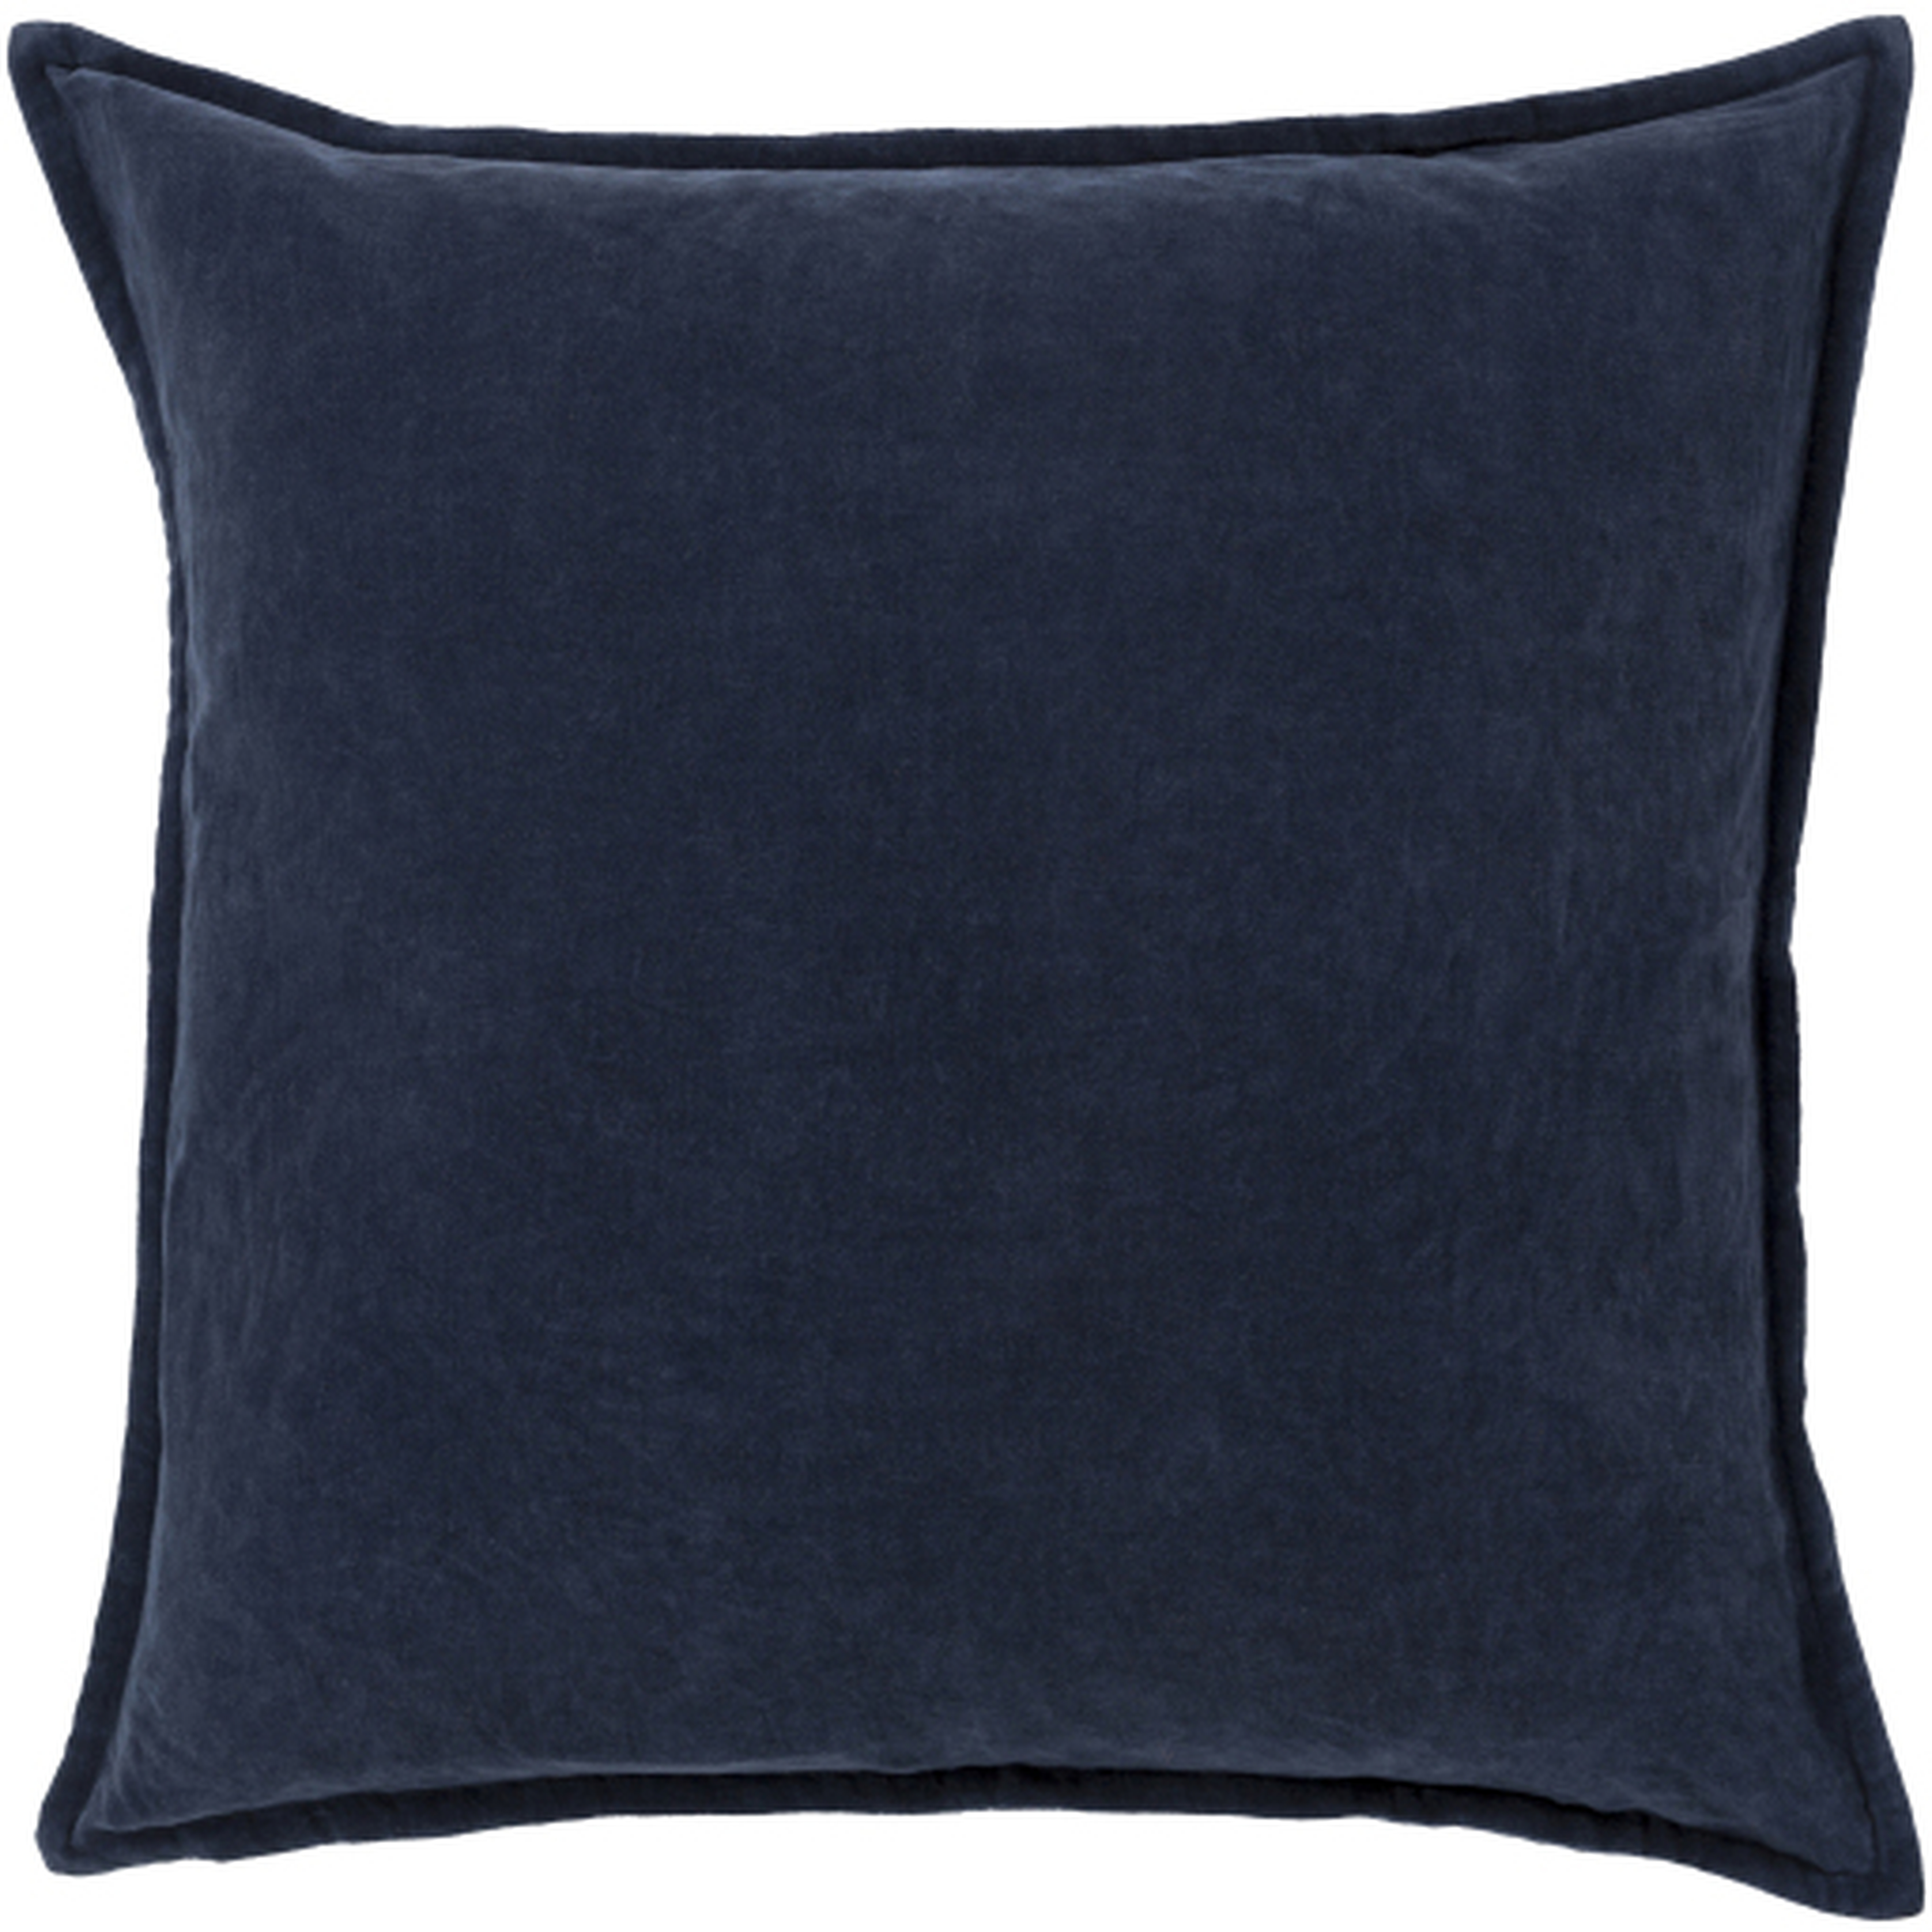 Cotton Velvet Pillow, 20" x 20", Navy - Surya